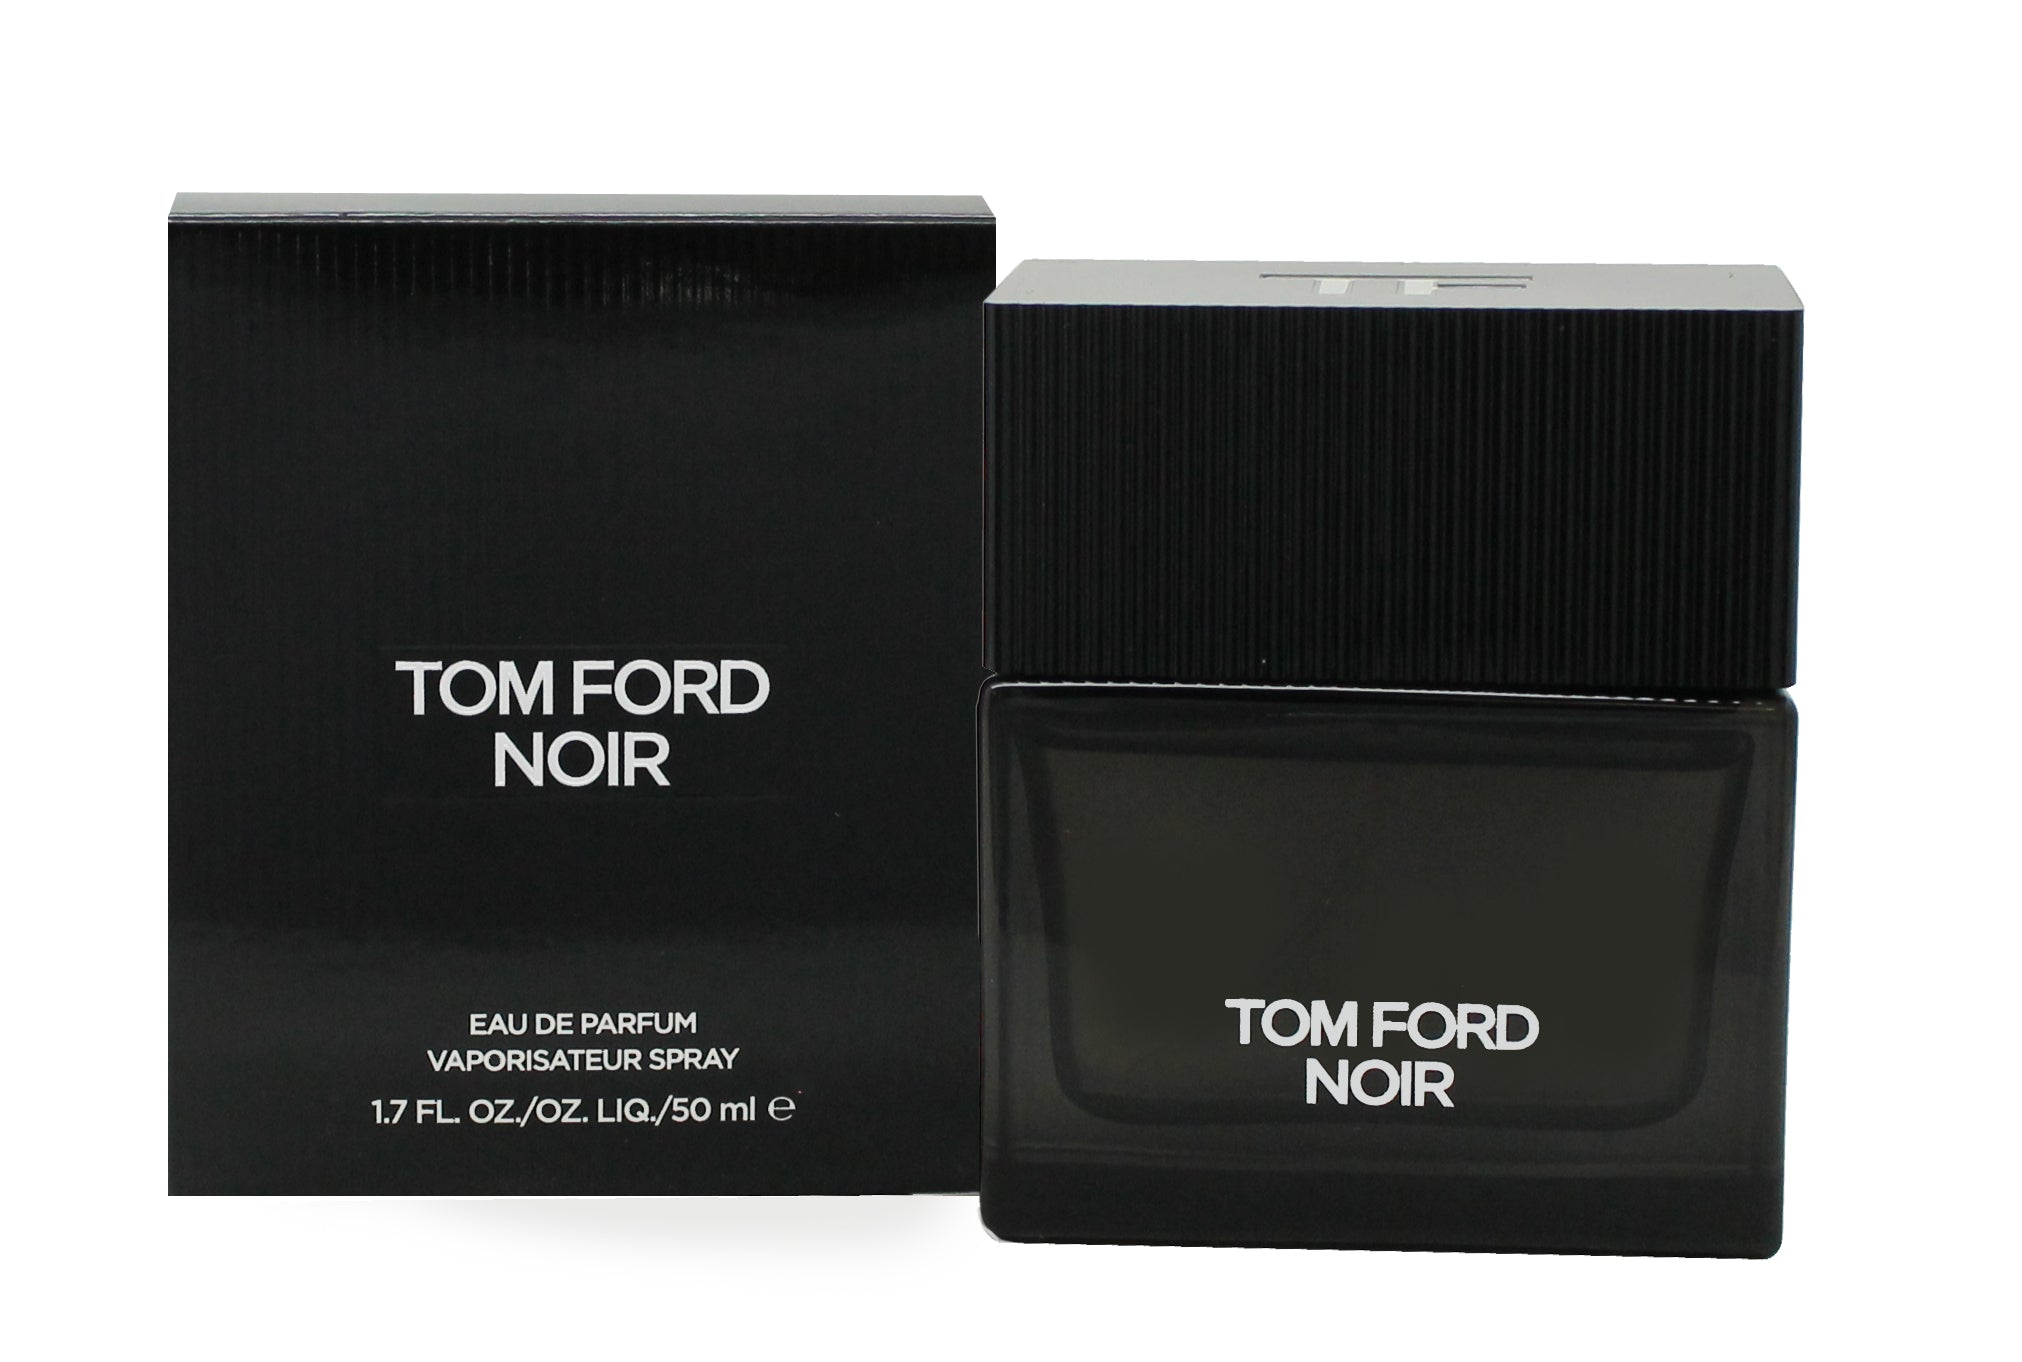 View Tom Ford Noir Eau de Parfum 50ml Spray information